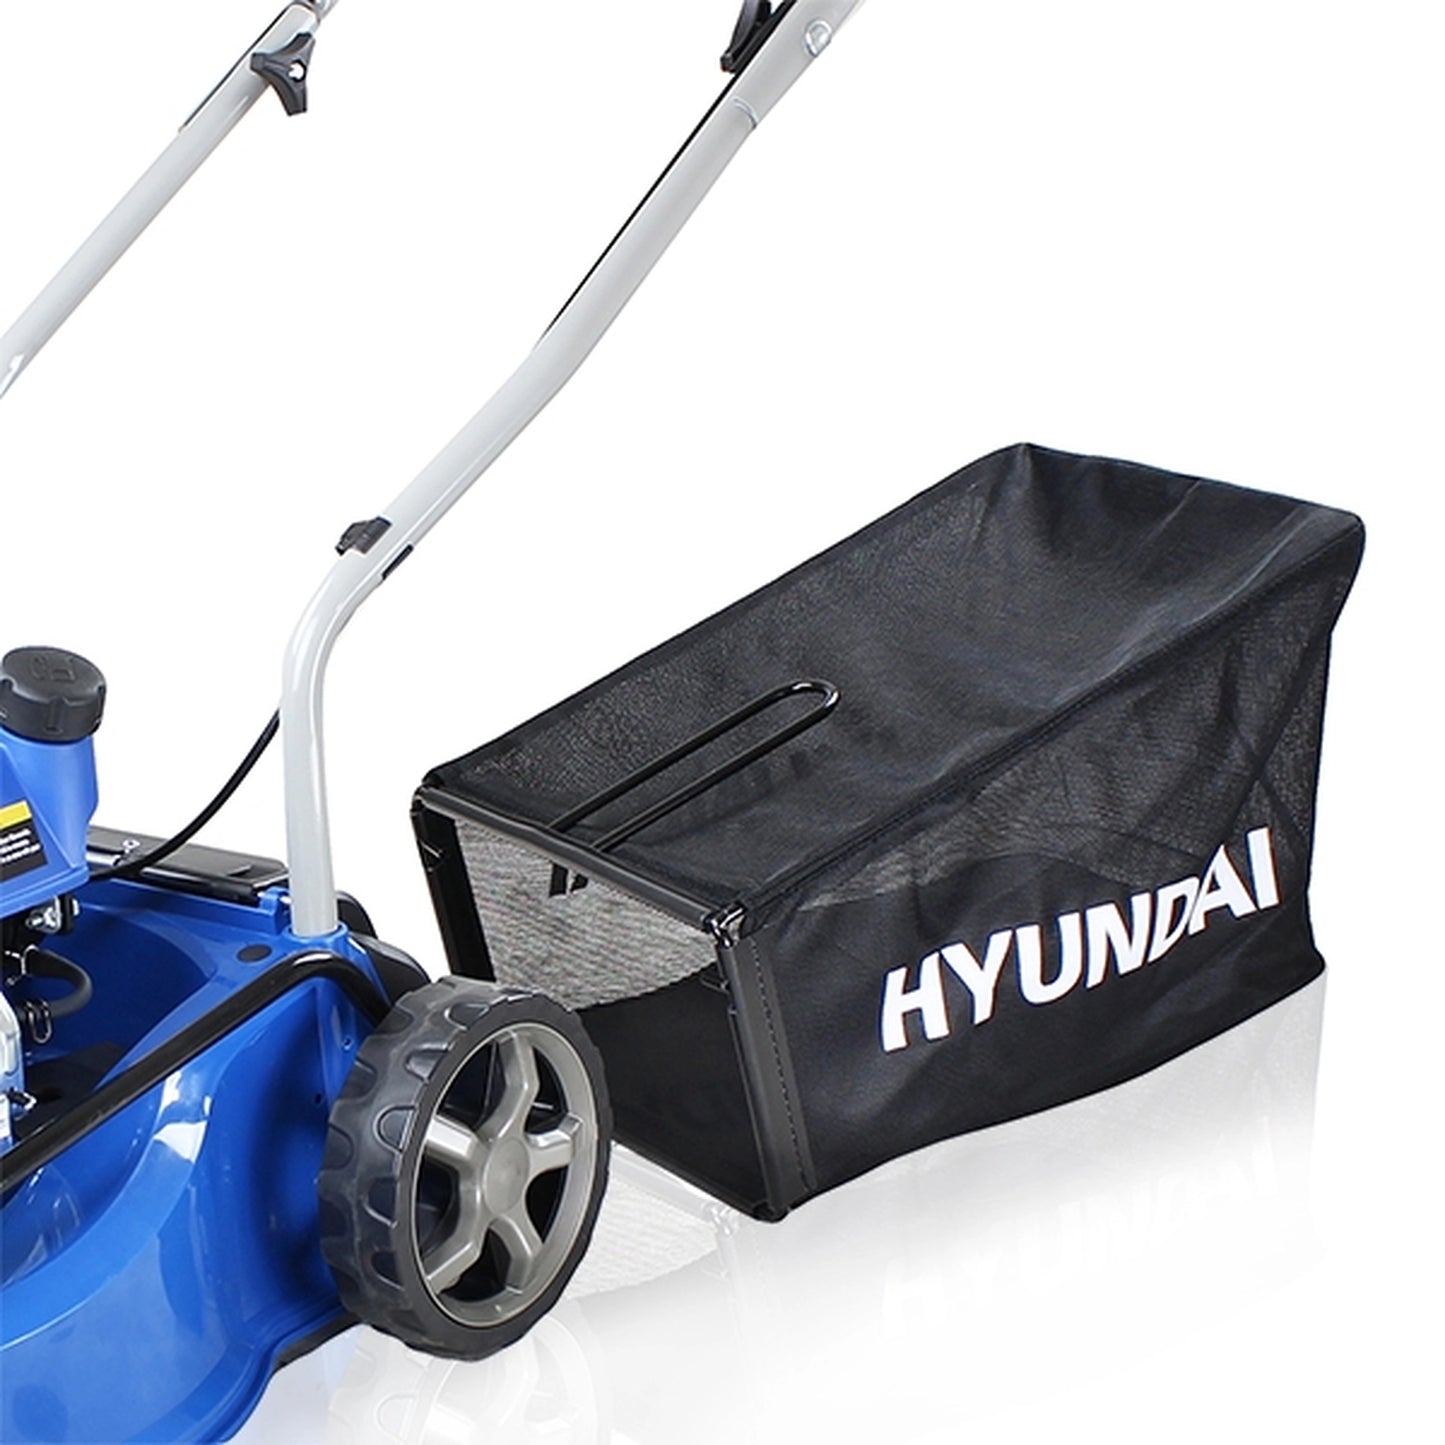 Hyundai HYM400P Push Petrol Lawn Mower 40cm